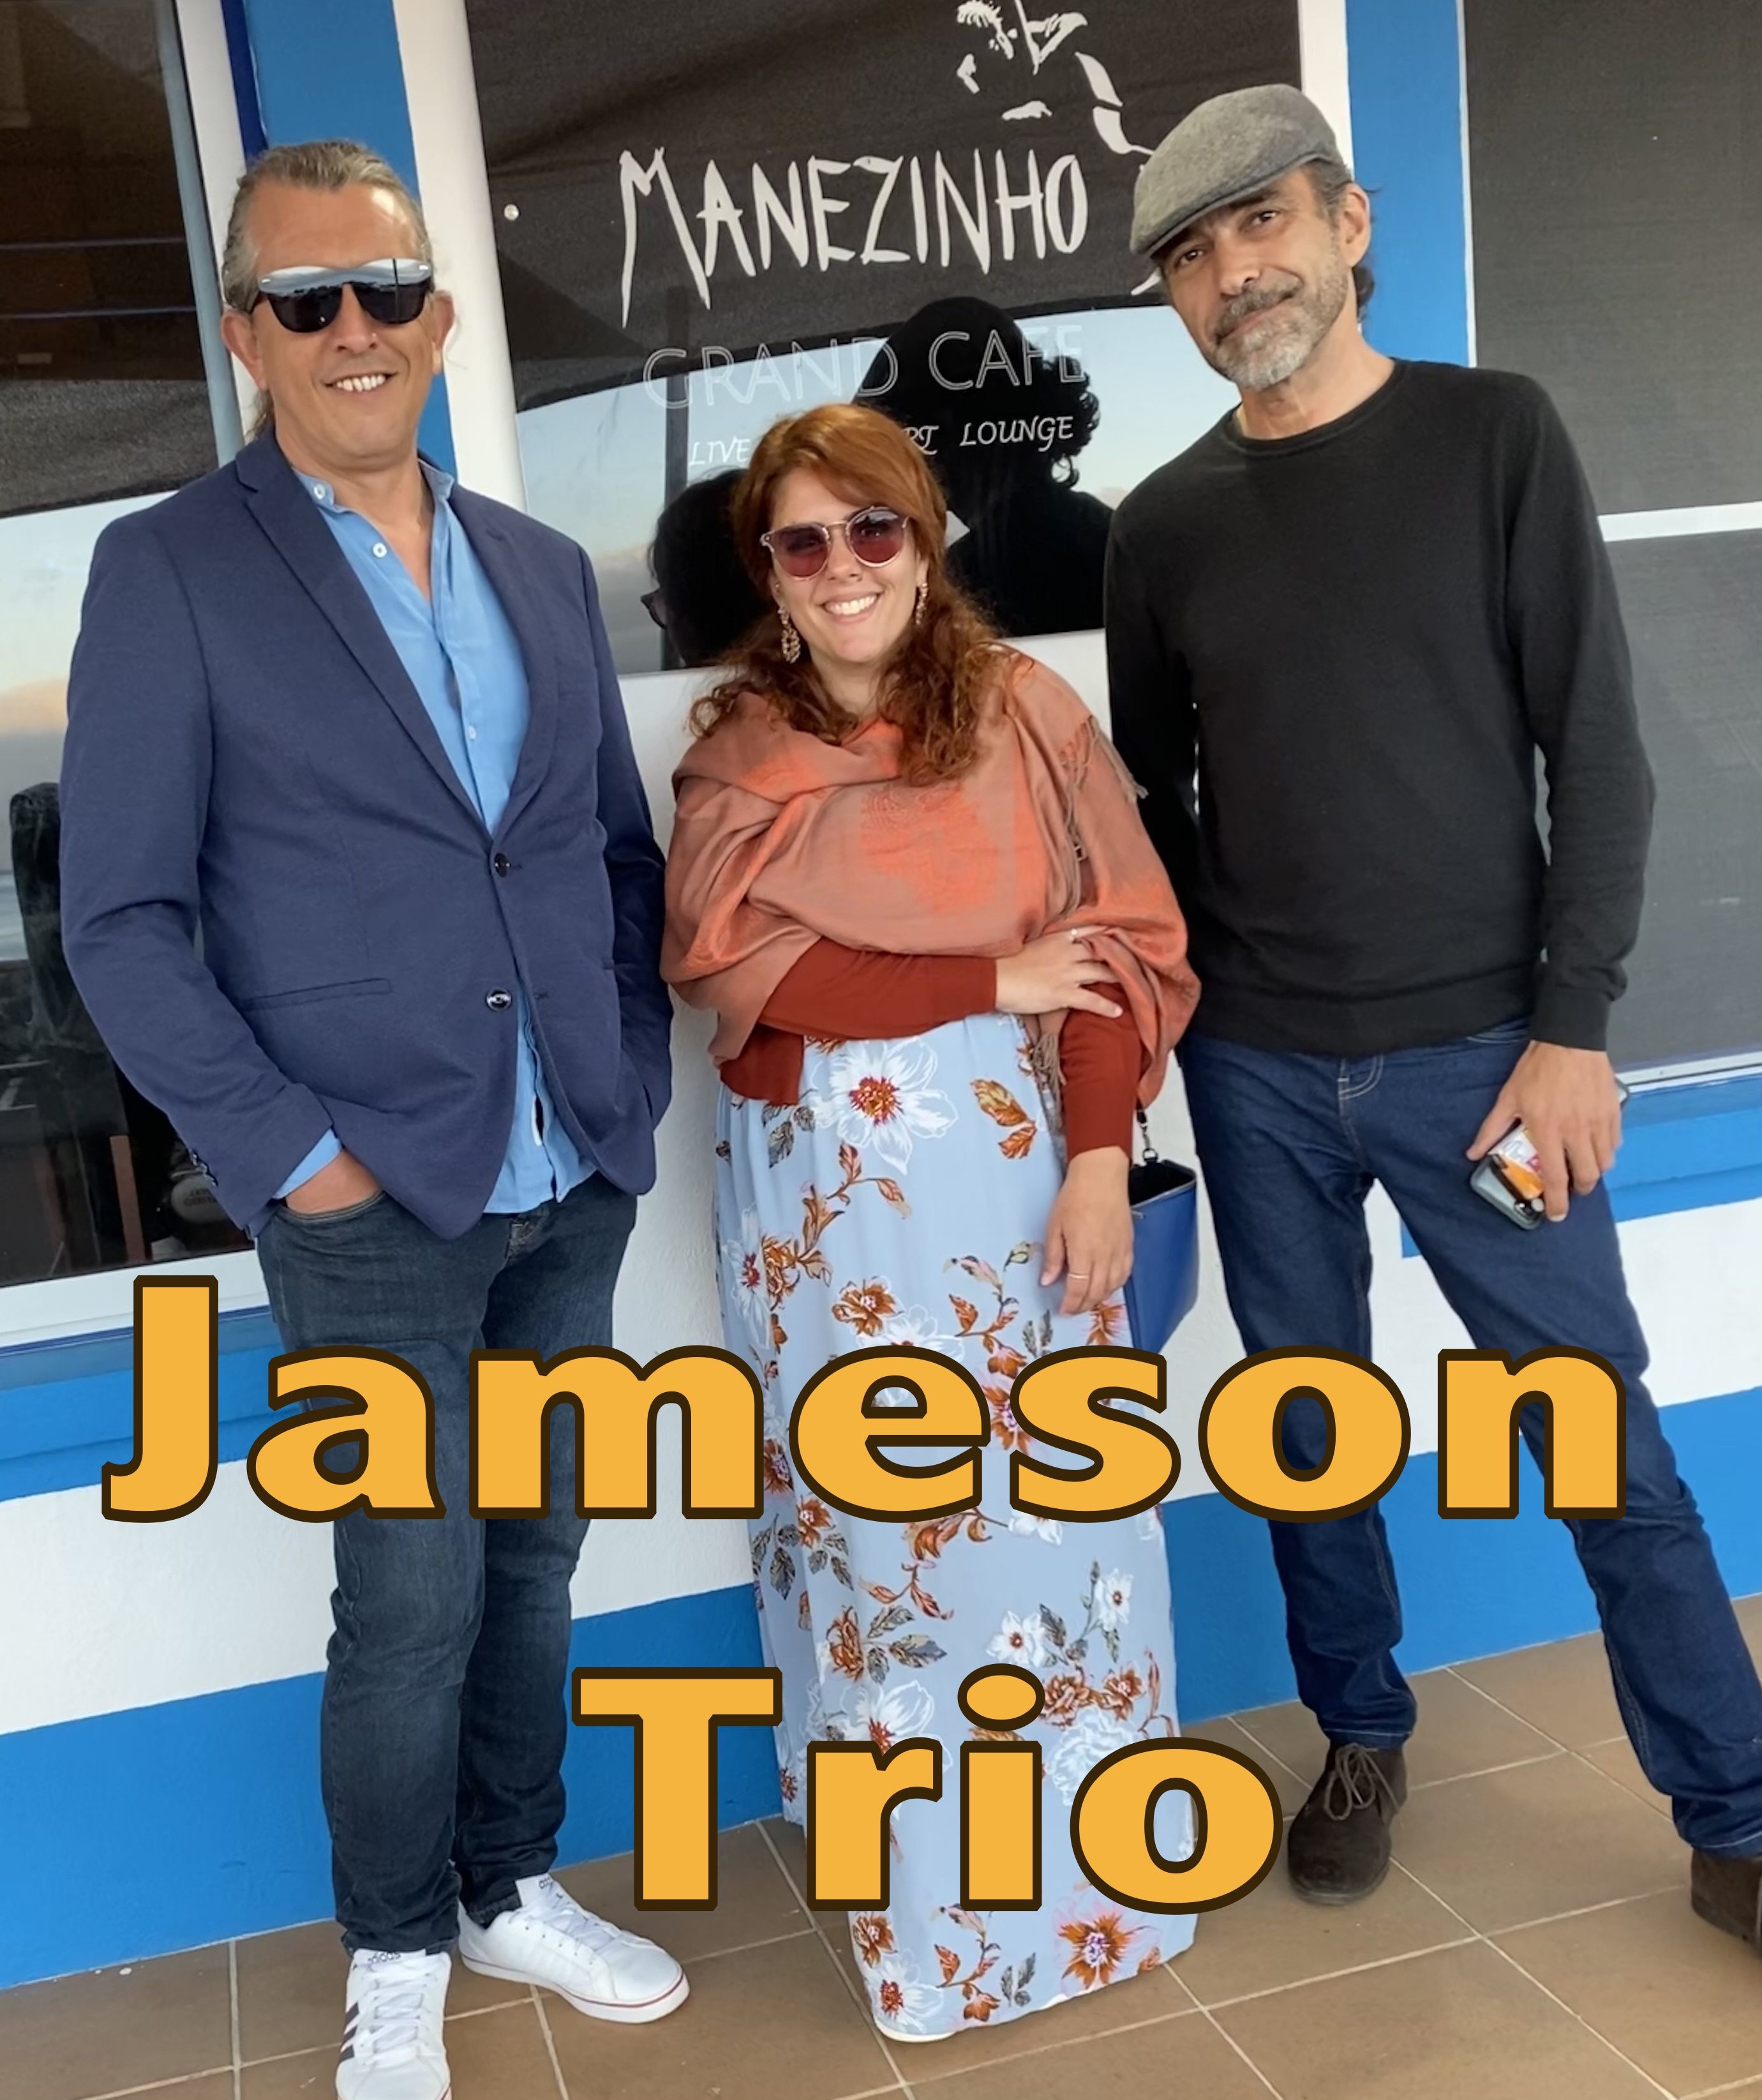 Trio Jameson plays in Art Restaurant Manezinho